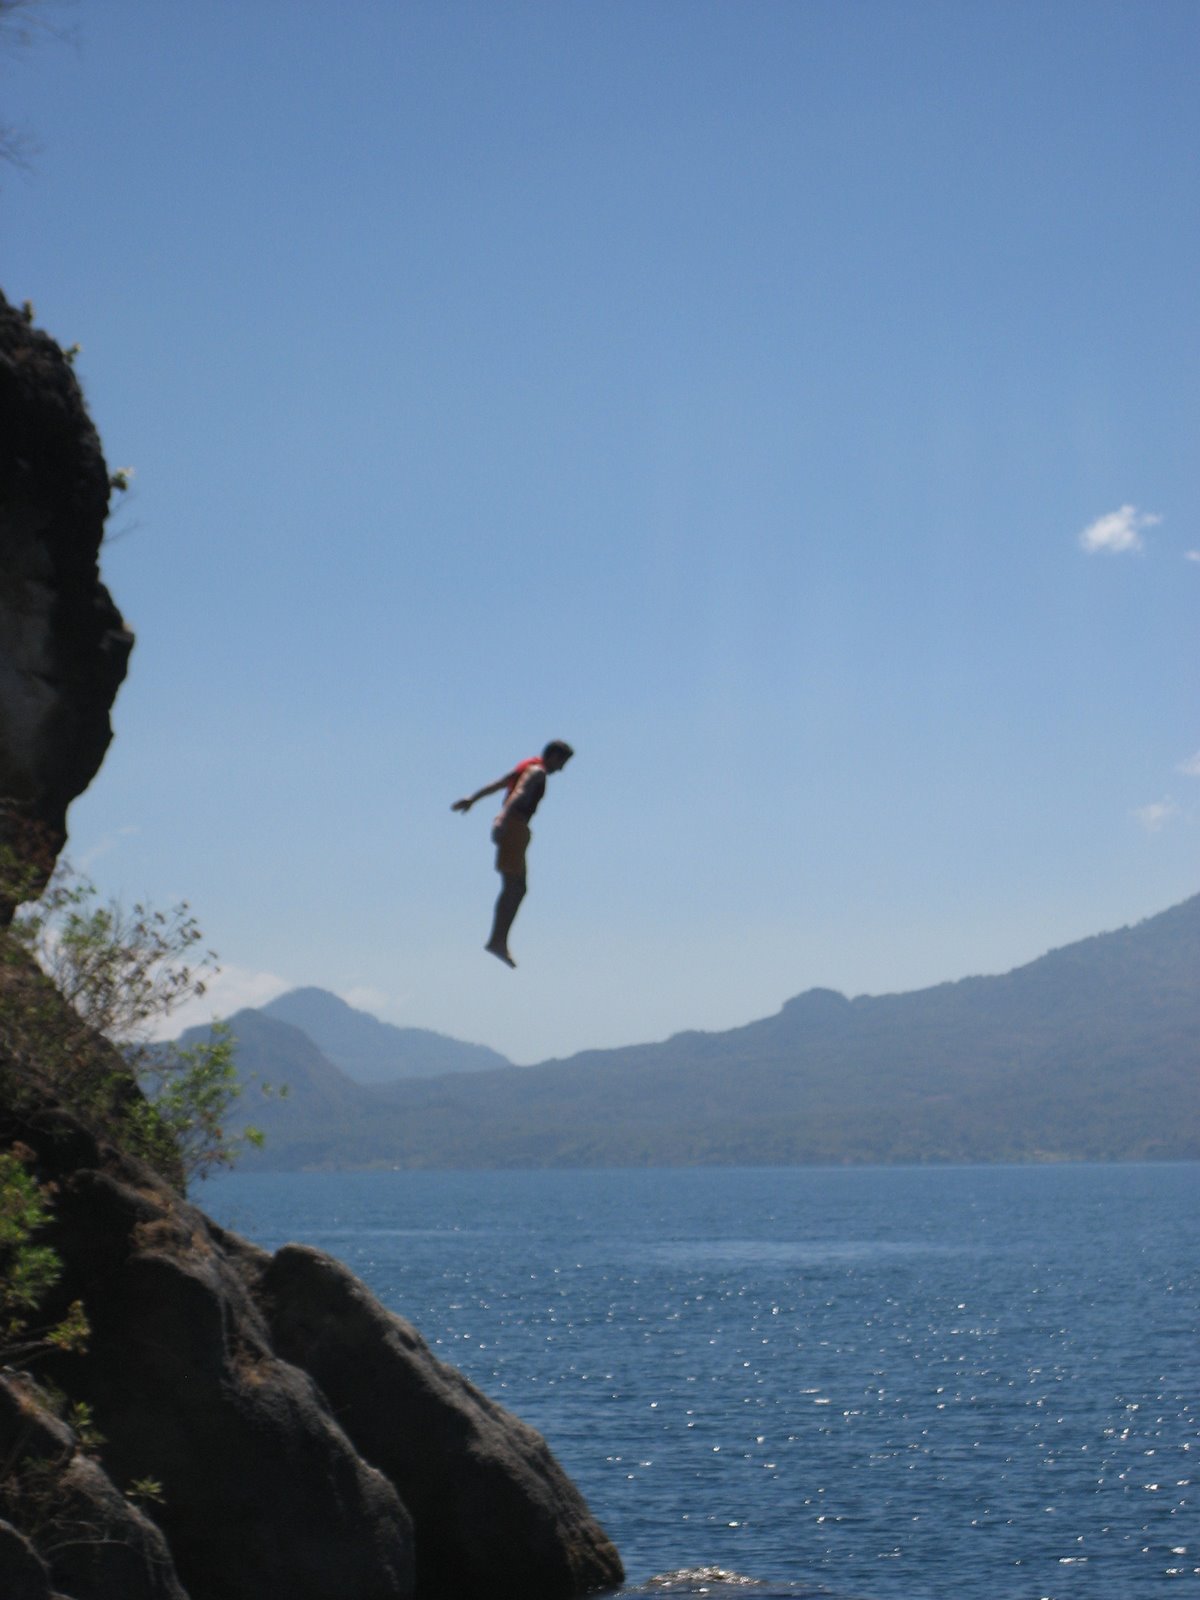  Rick cliff diving in Guatemala. 